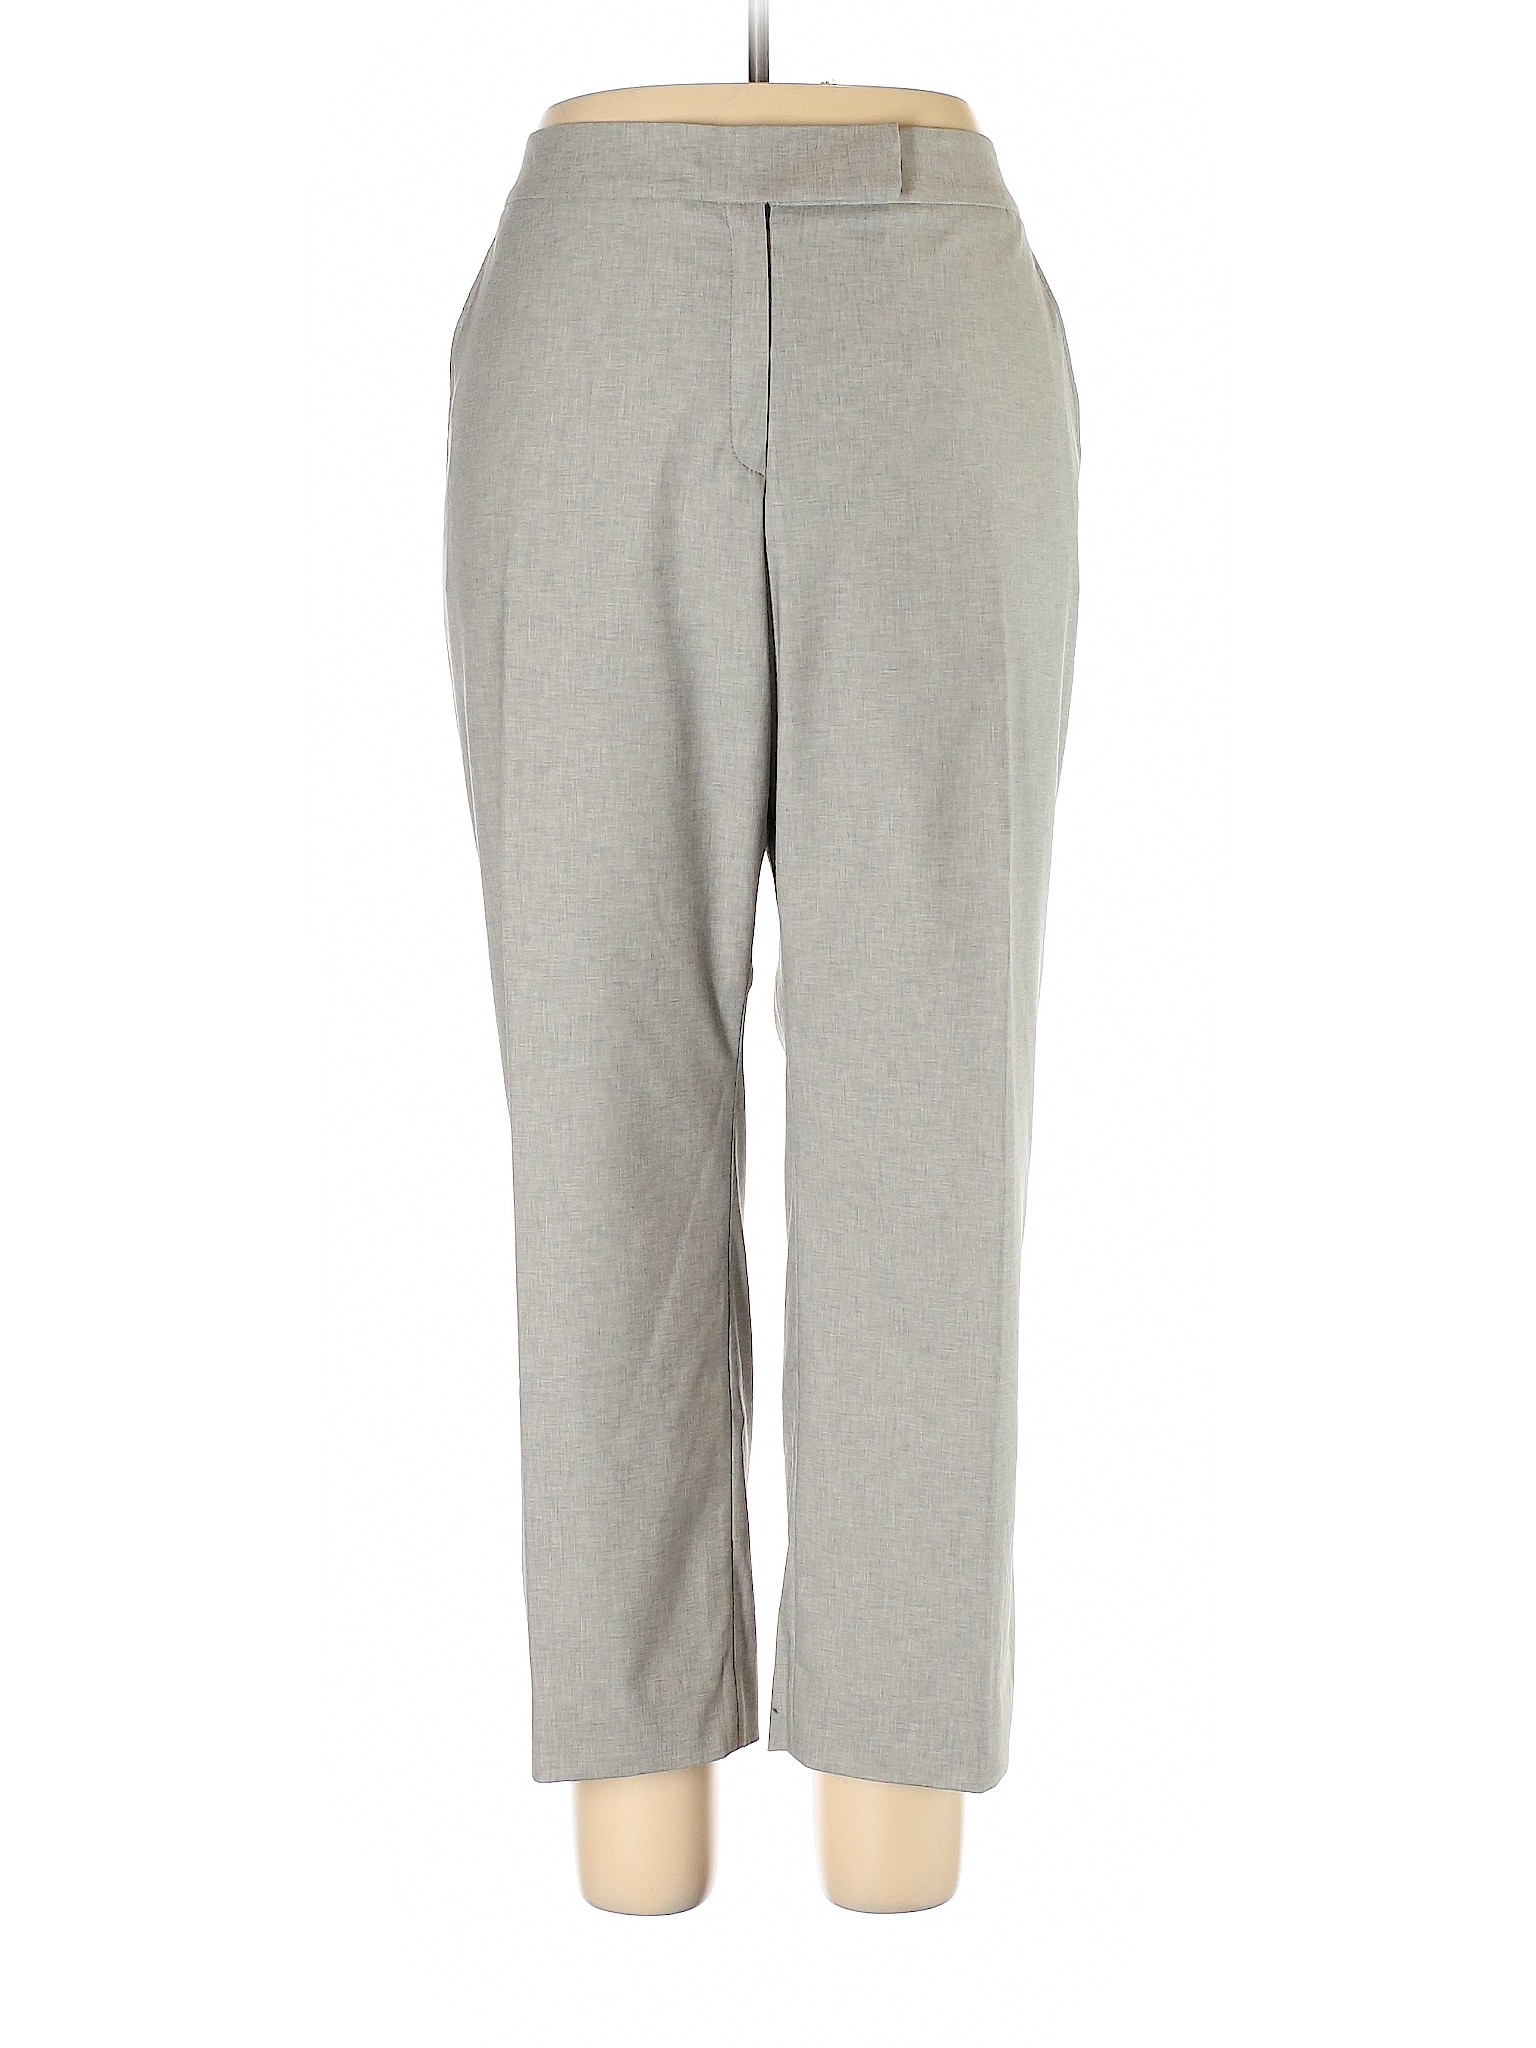 Faconnable Women Gray Wool Pants 14 | eBay